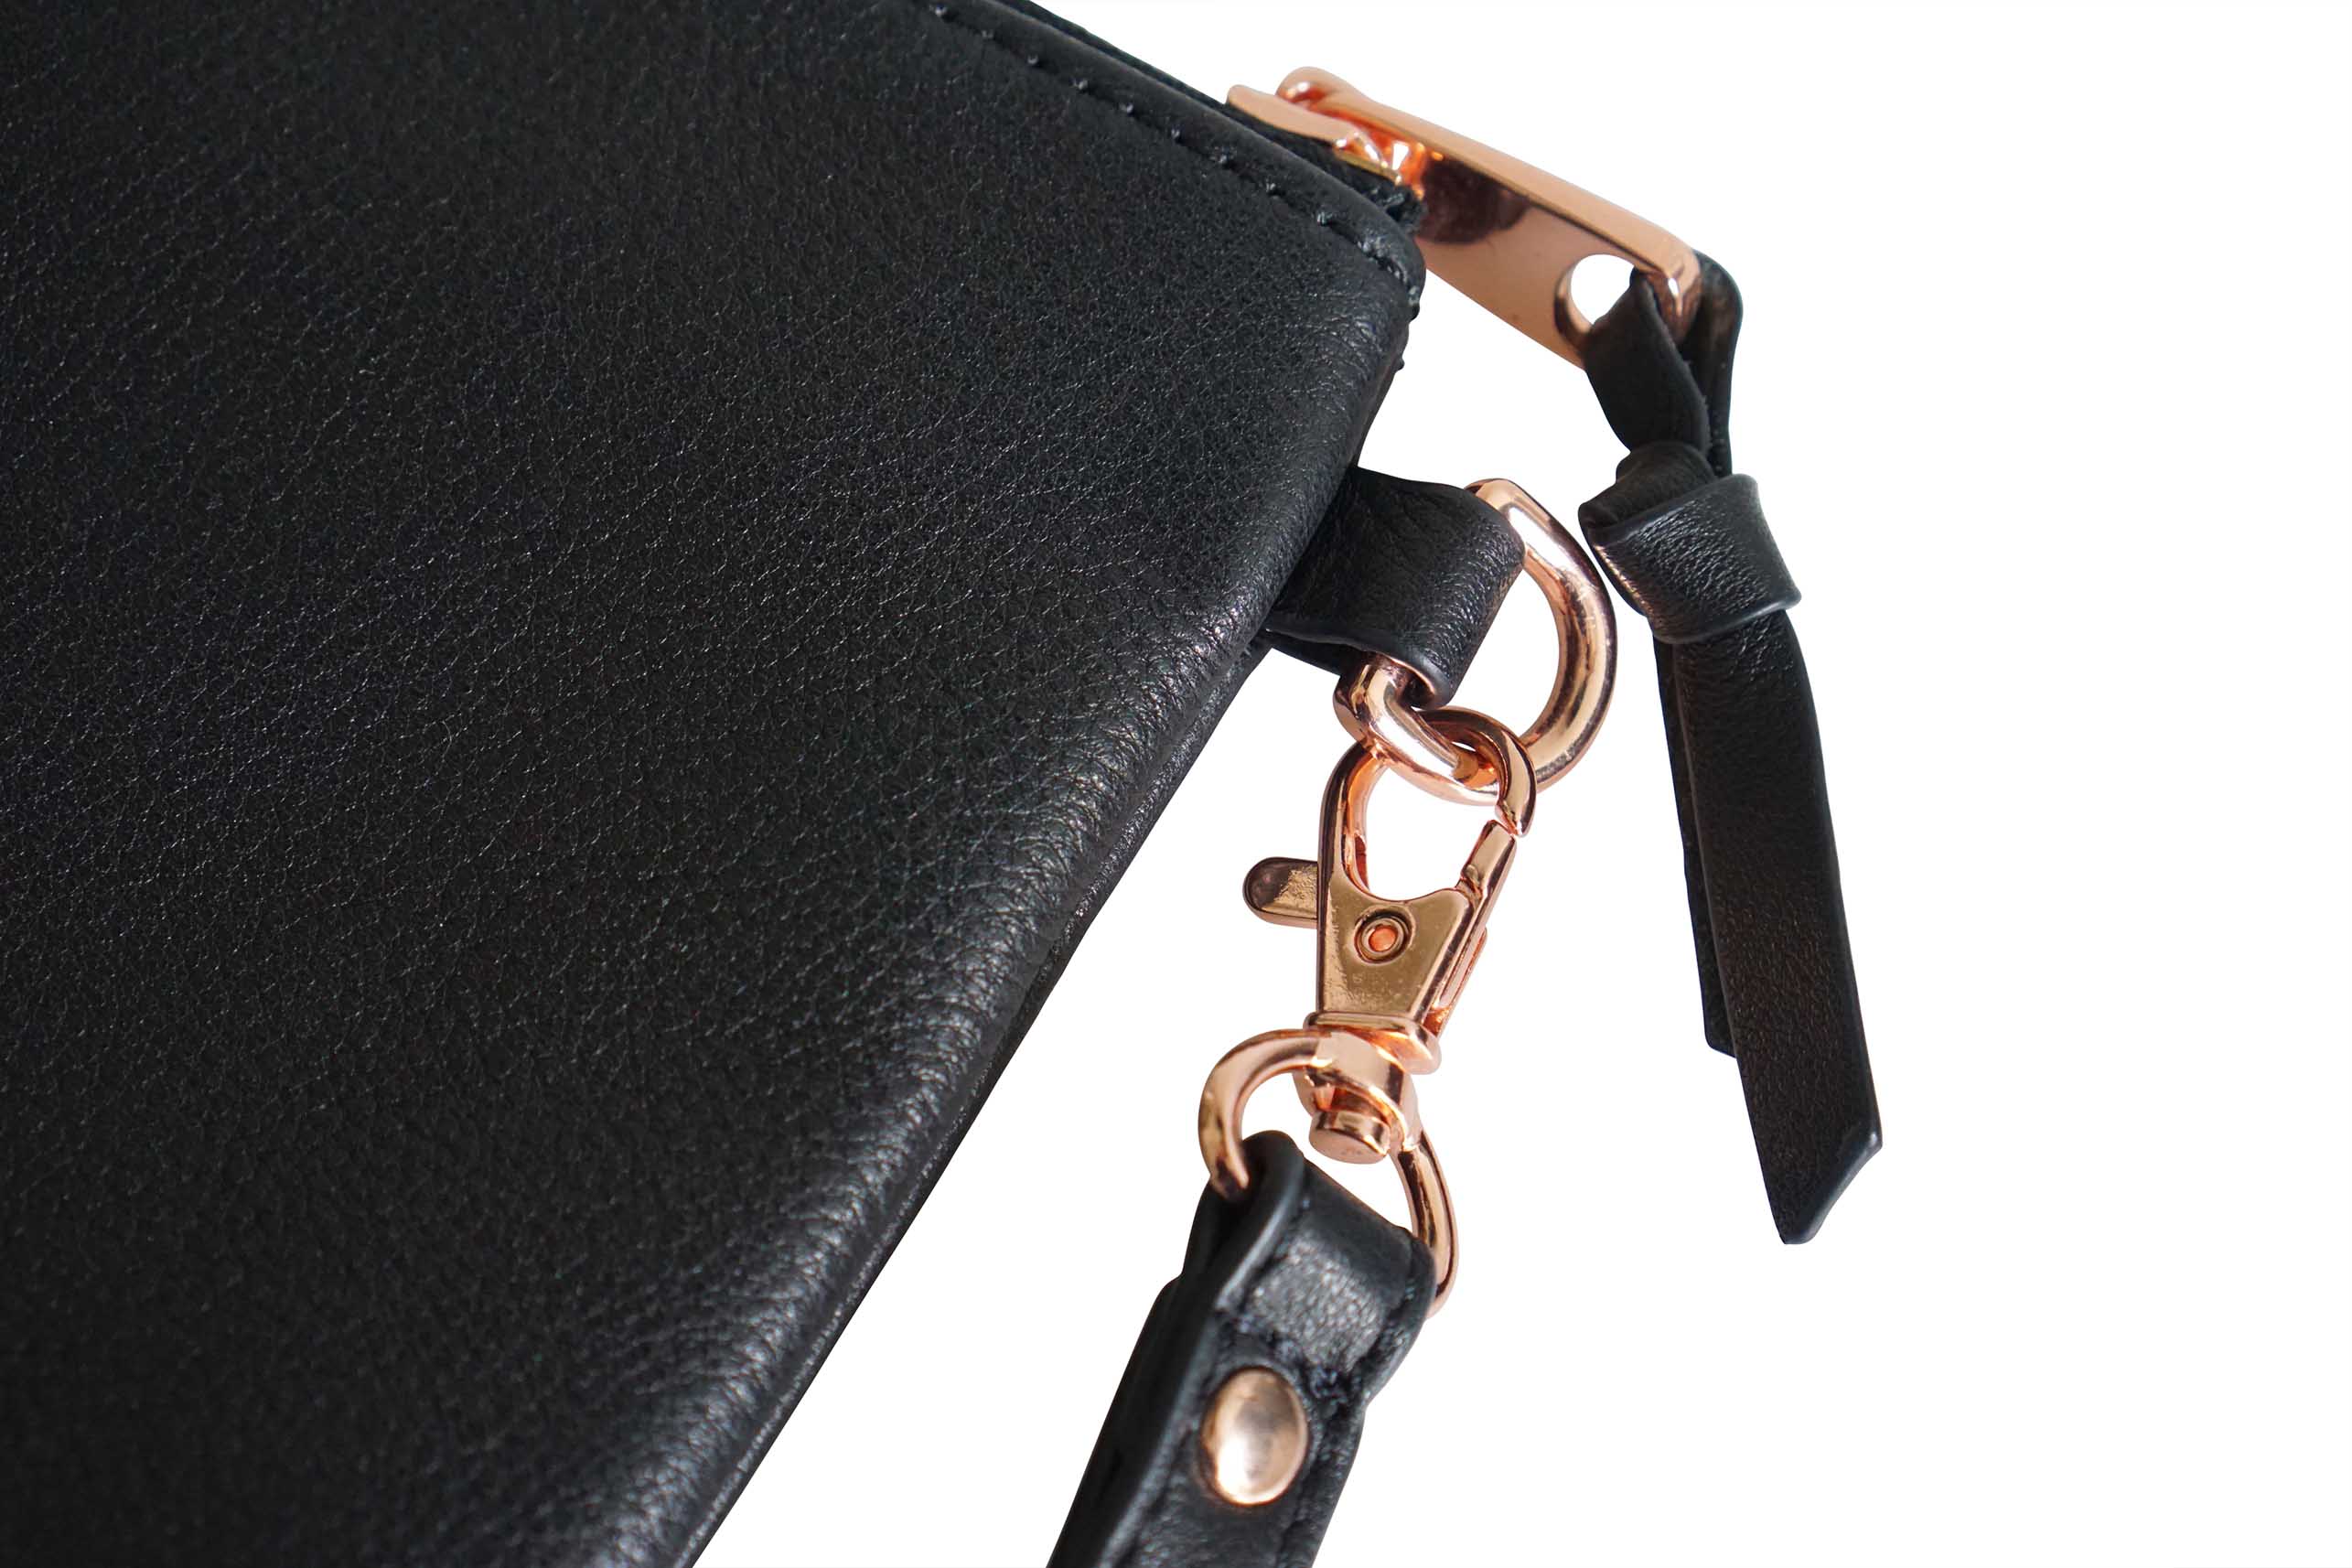 Leather wristlet pouch bag - Classic Black